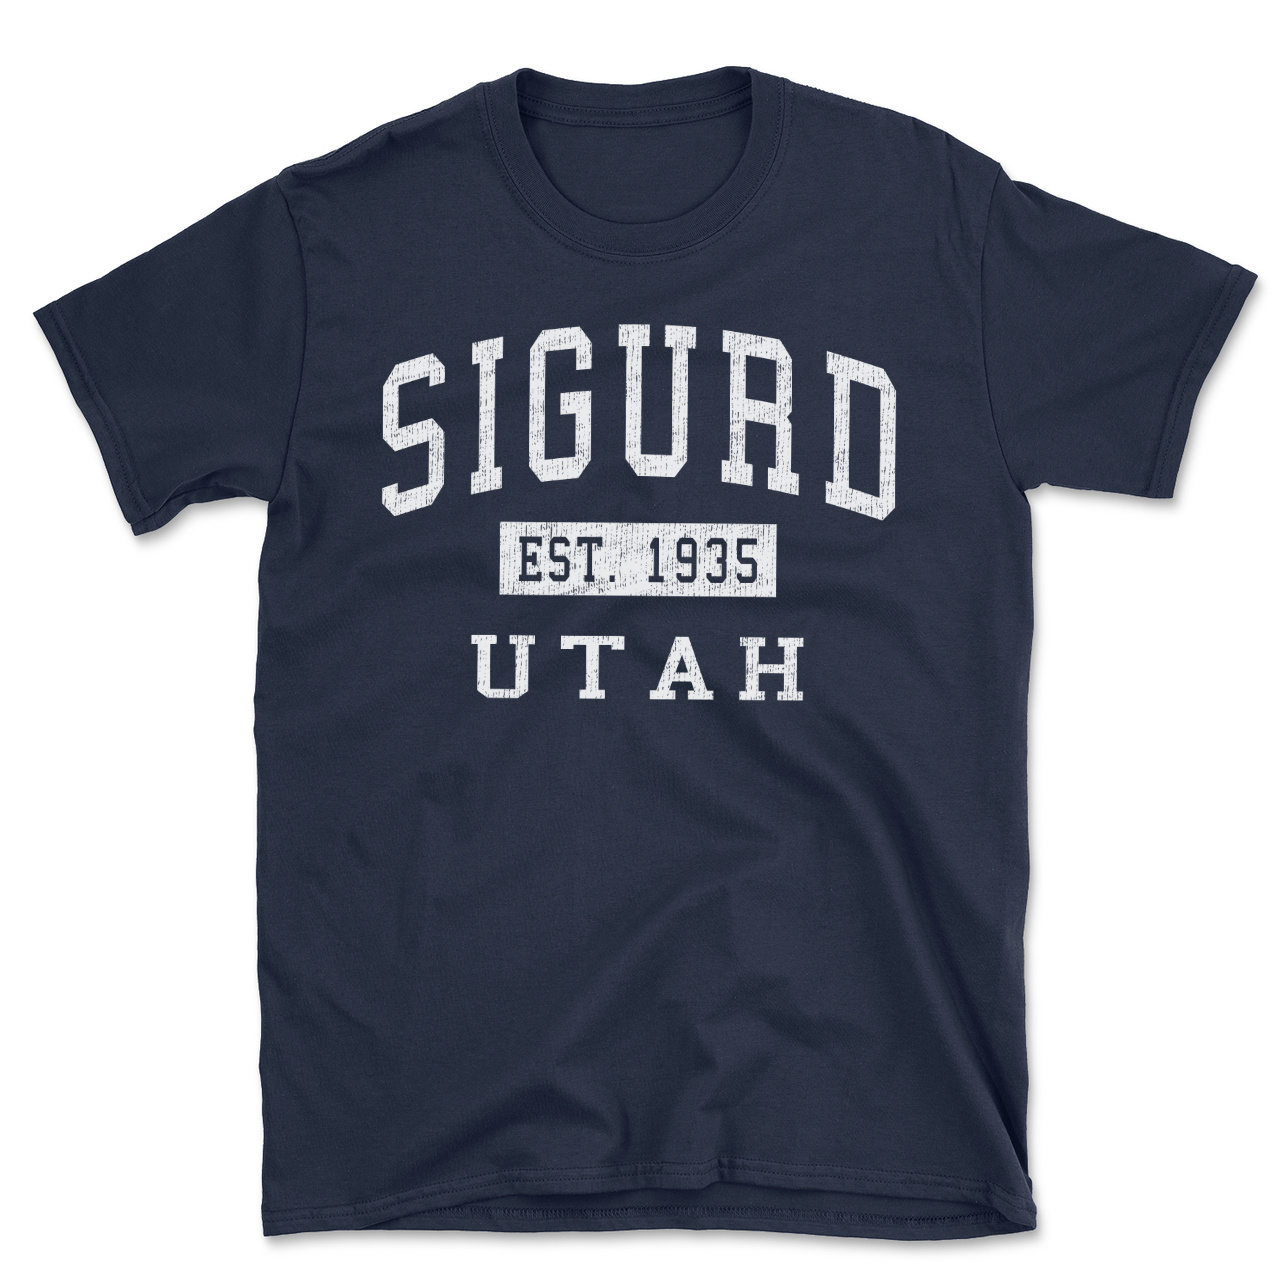 Sigurd Utah Classic Established Men's Cotton T-Shirt - image 1 of 1